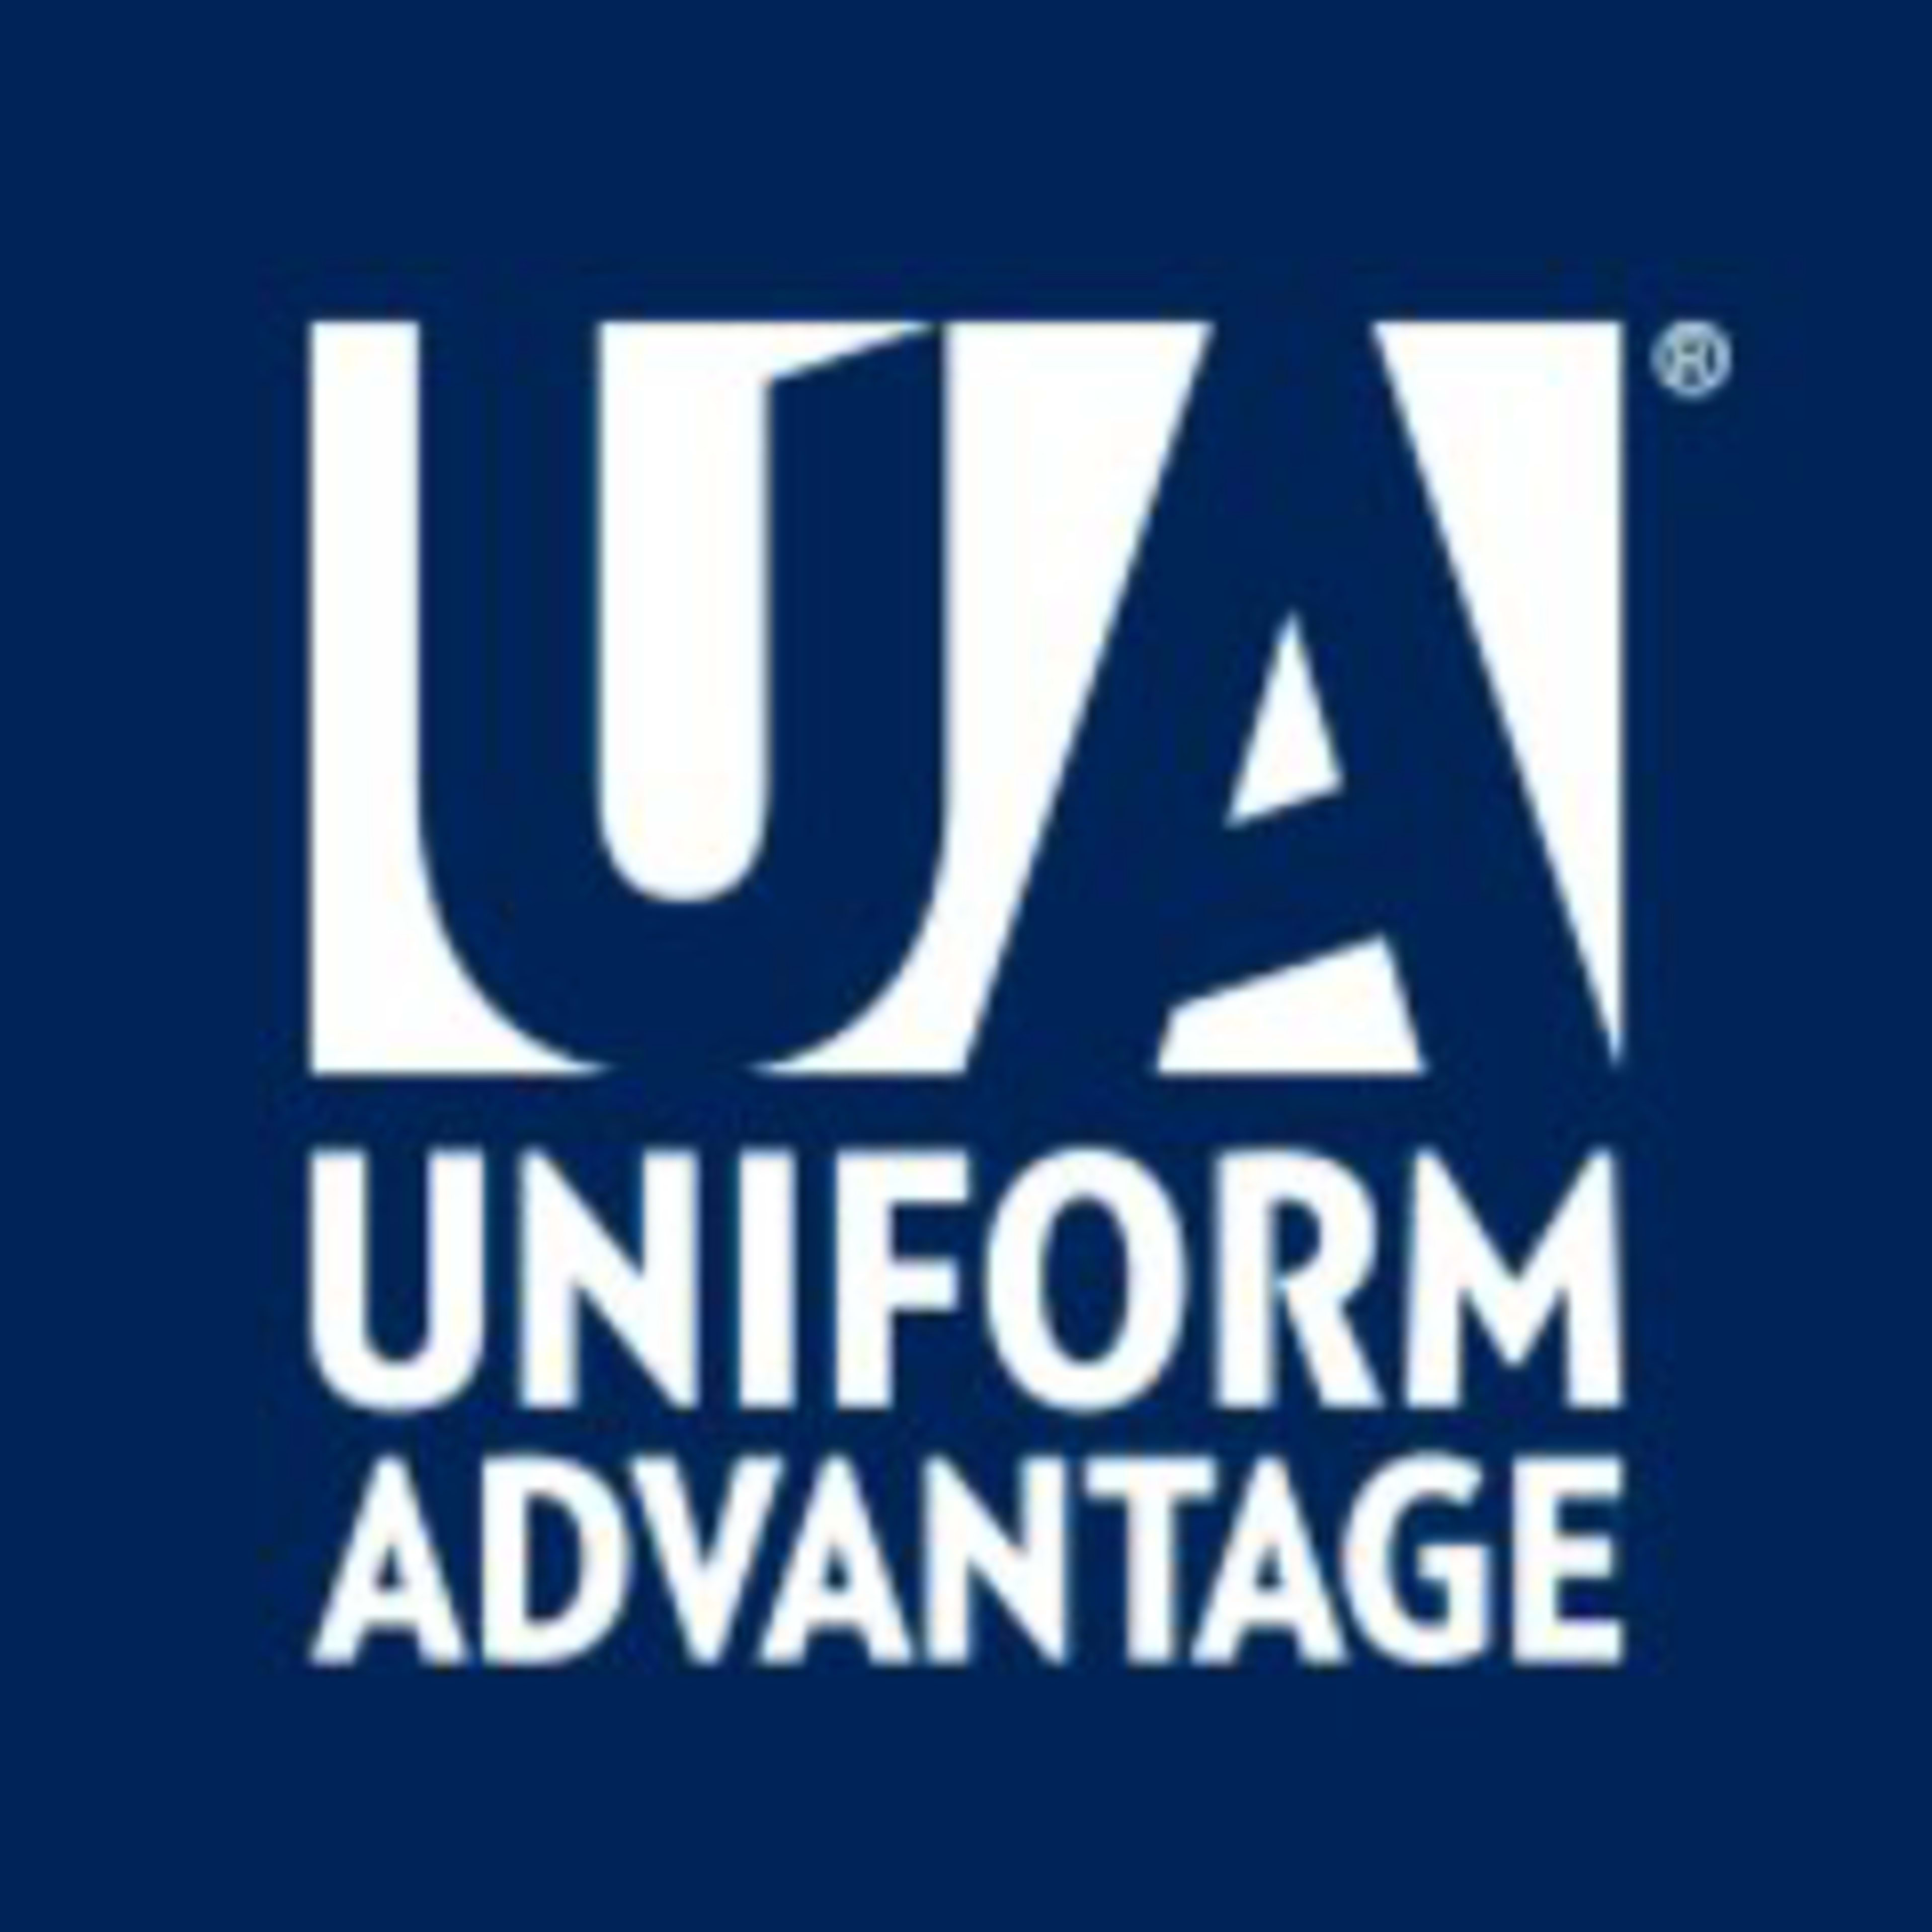 Uniform Advantage Code